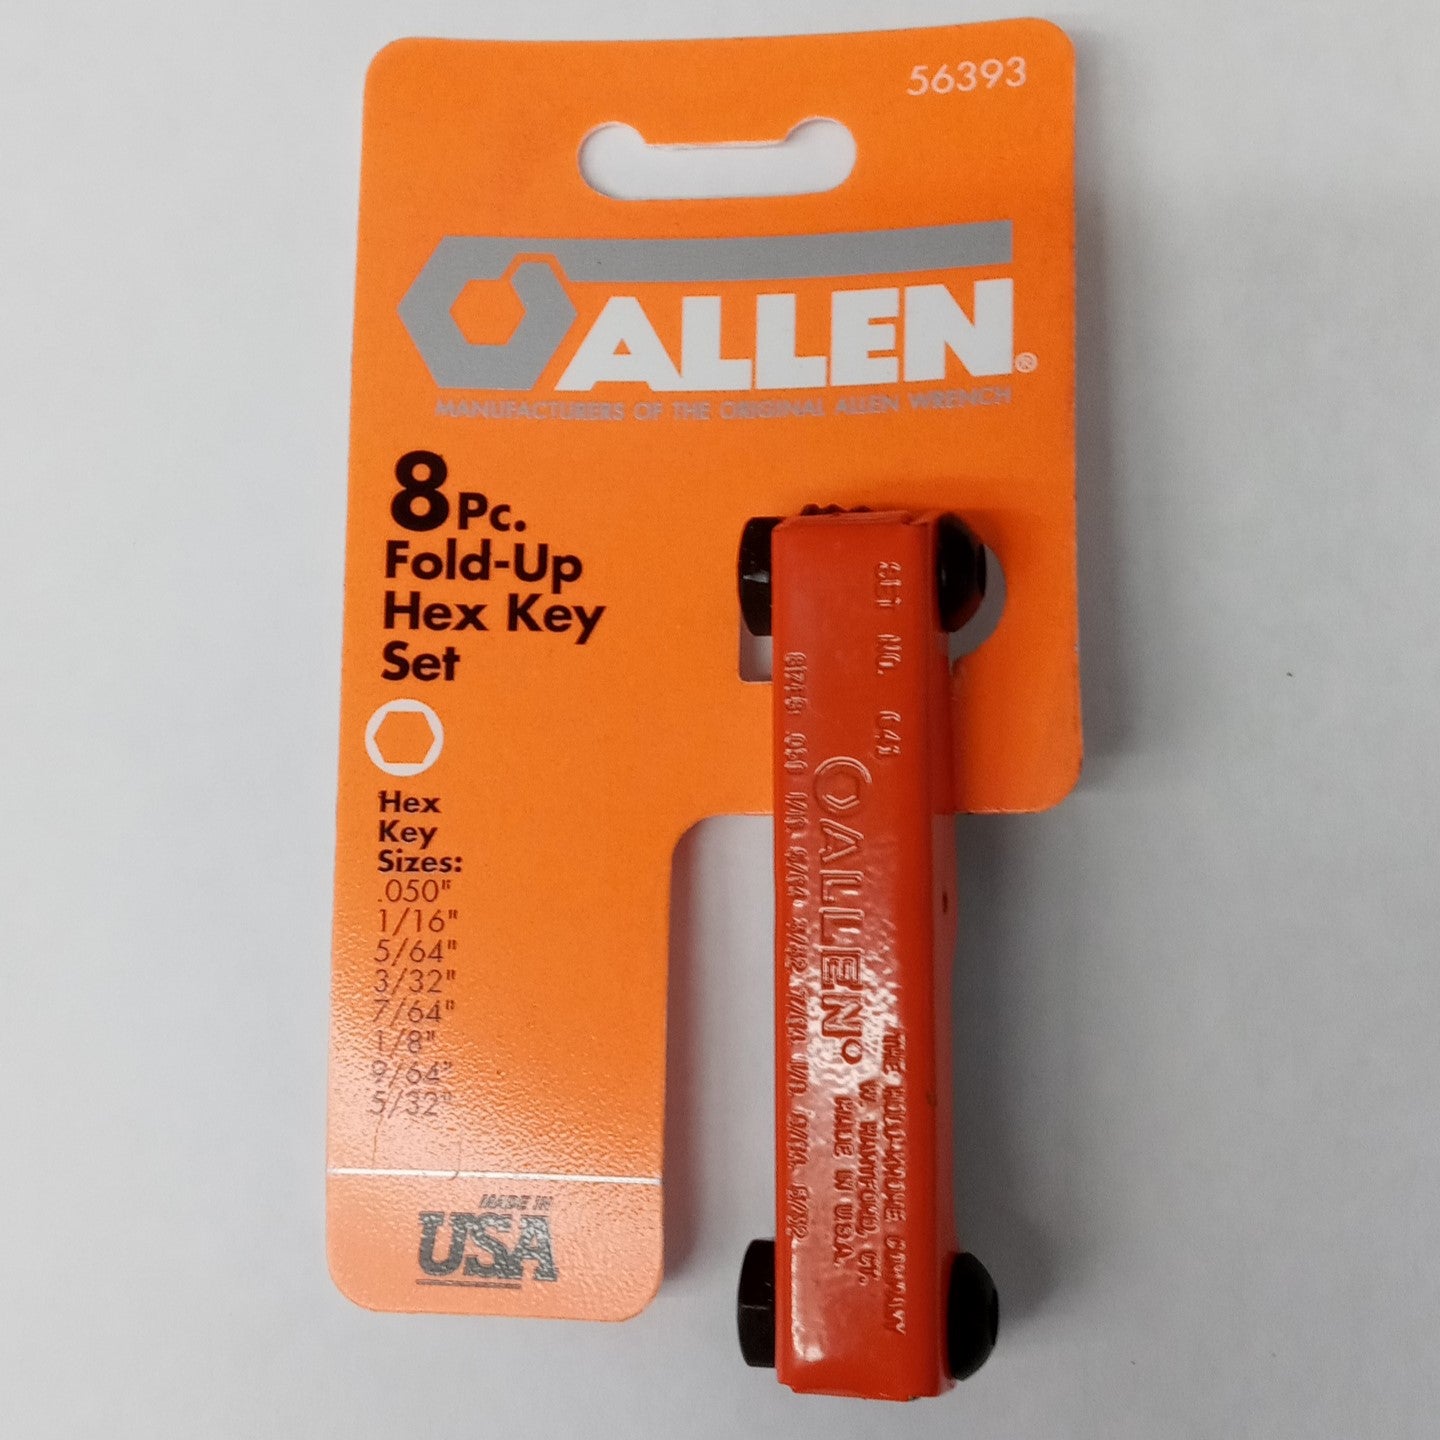 Allen 56393 8pc Fold-Up Hex Key Set USA